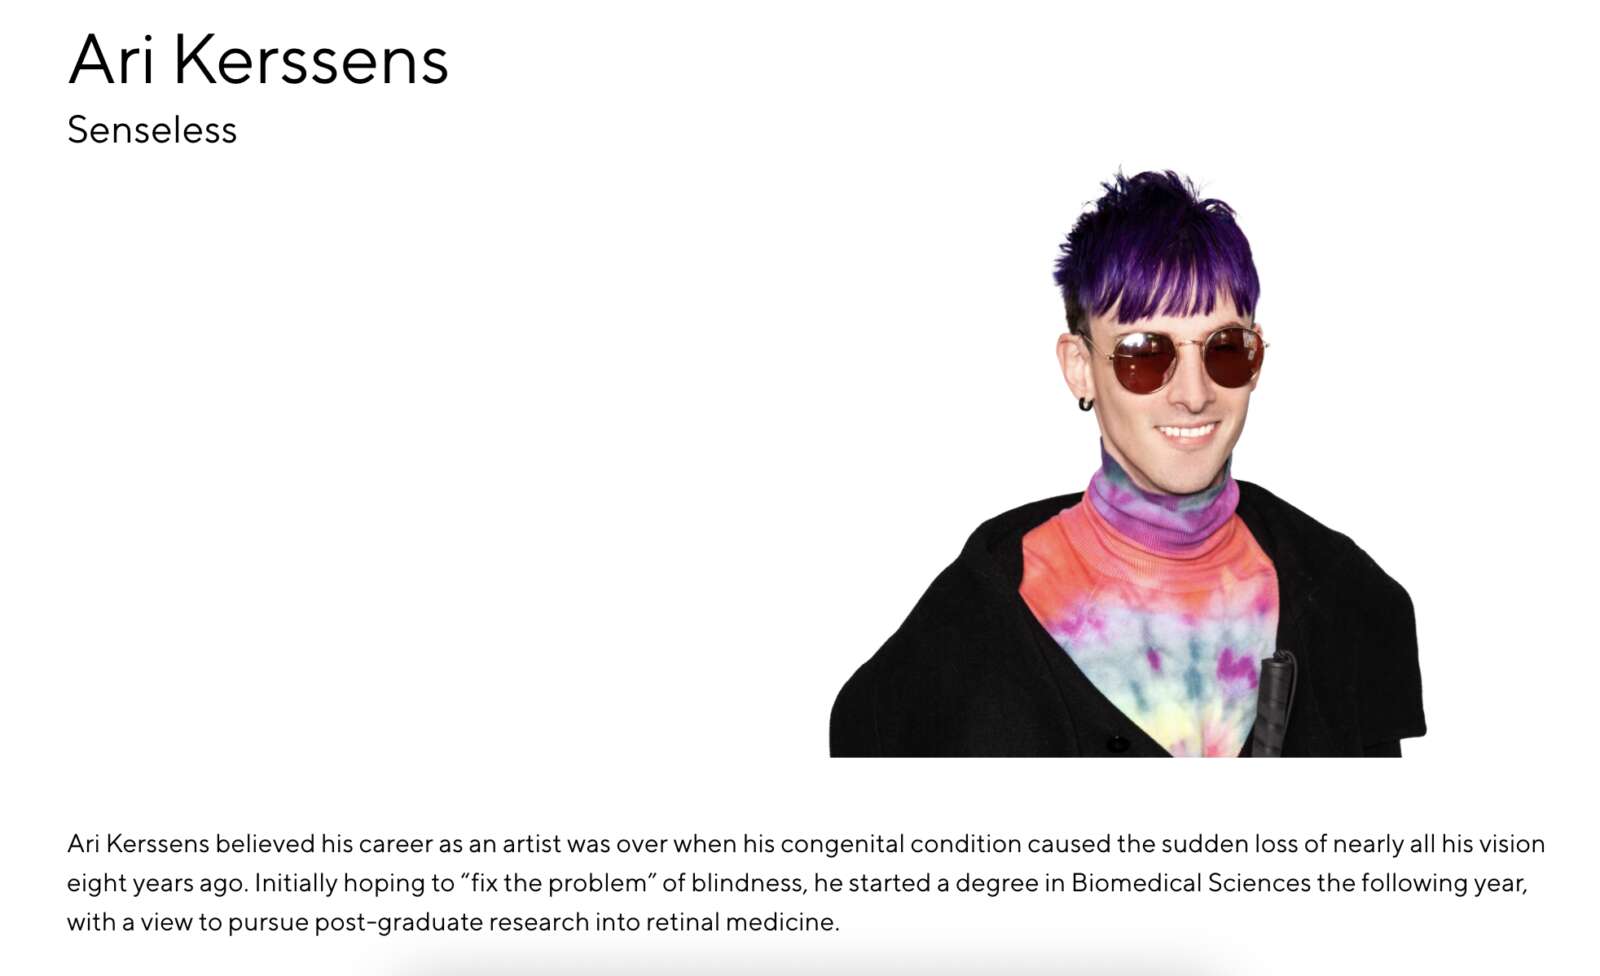 Screenshot of Ari's work. Images Shows Ari with short purple hair, wearing sunglasses, a tie dye shirt and black jacket.